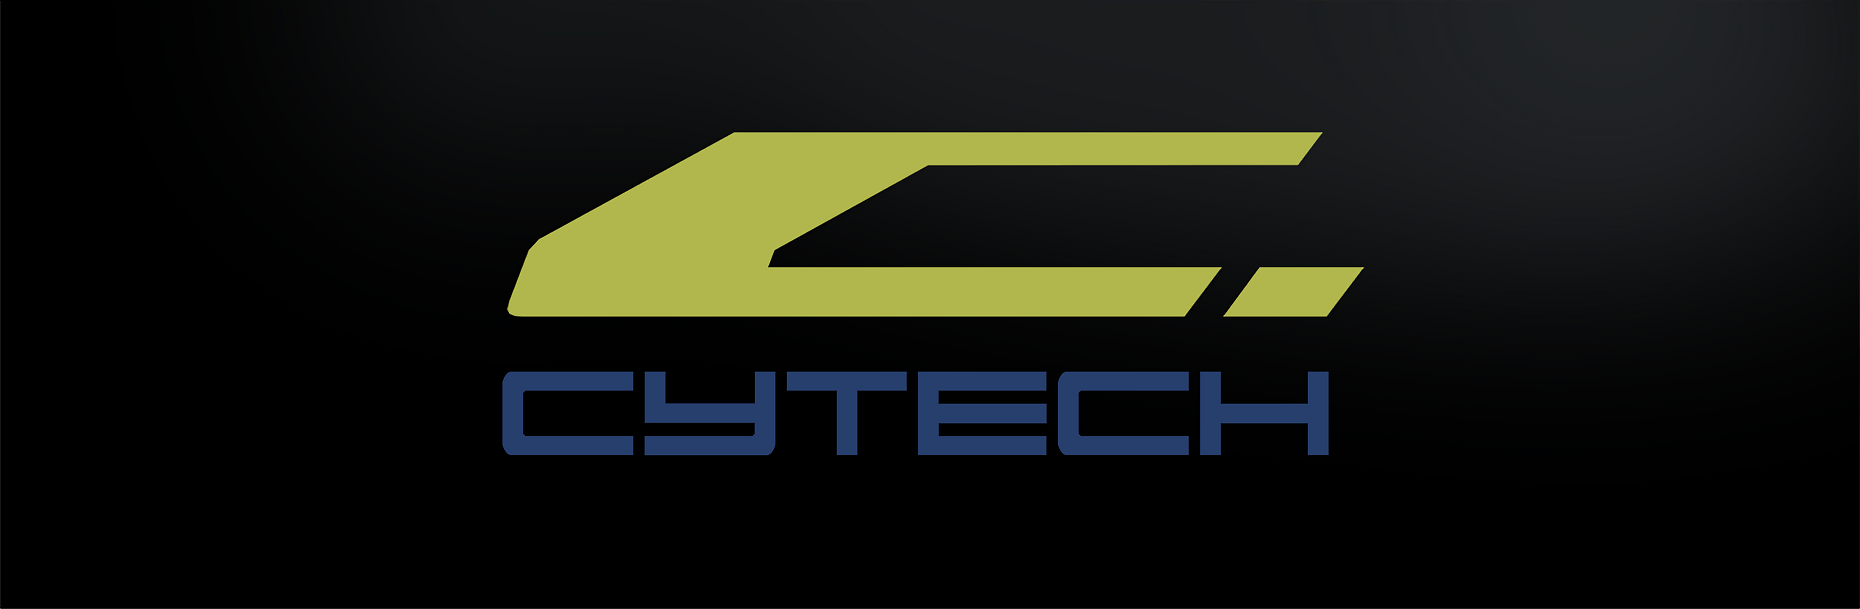 CyTech Group